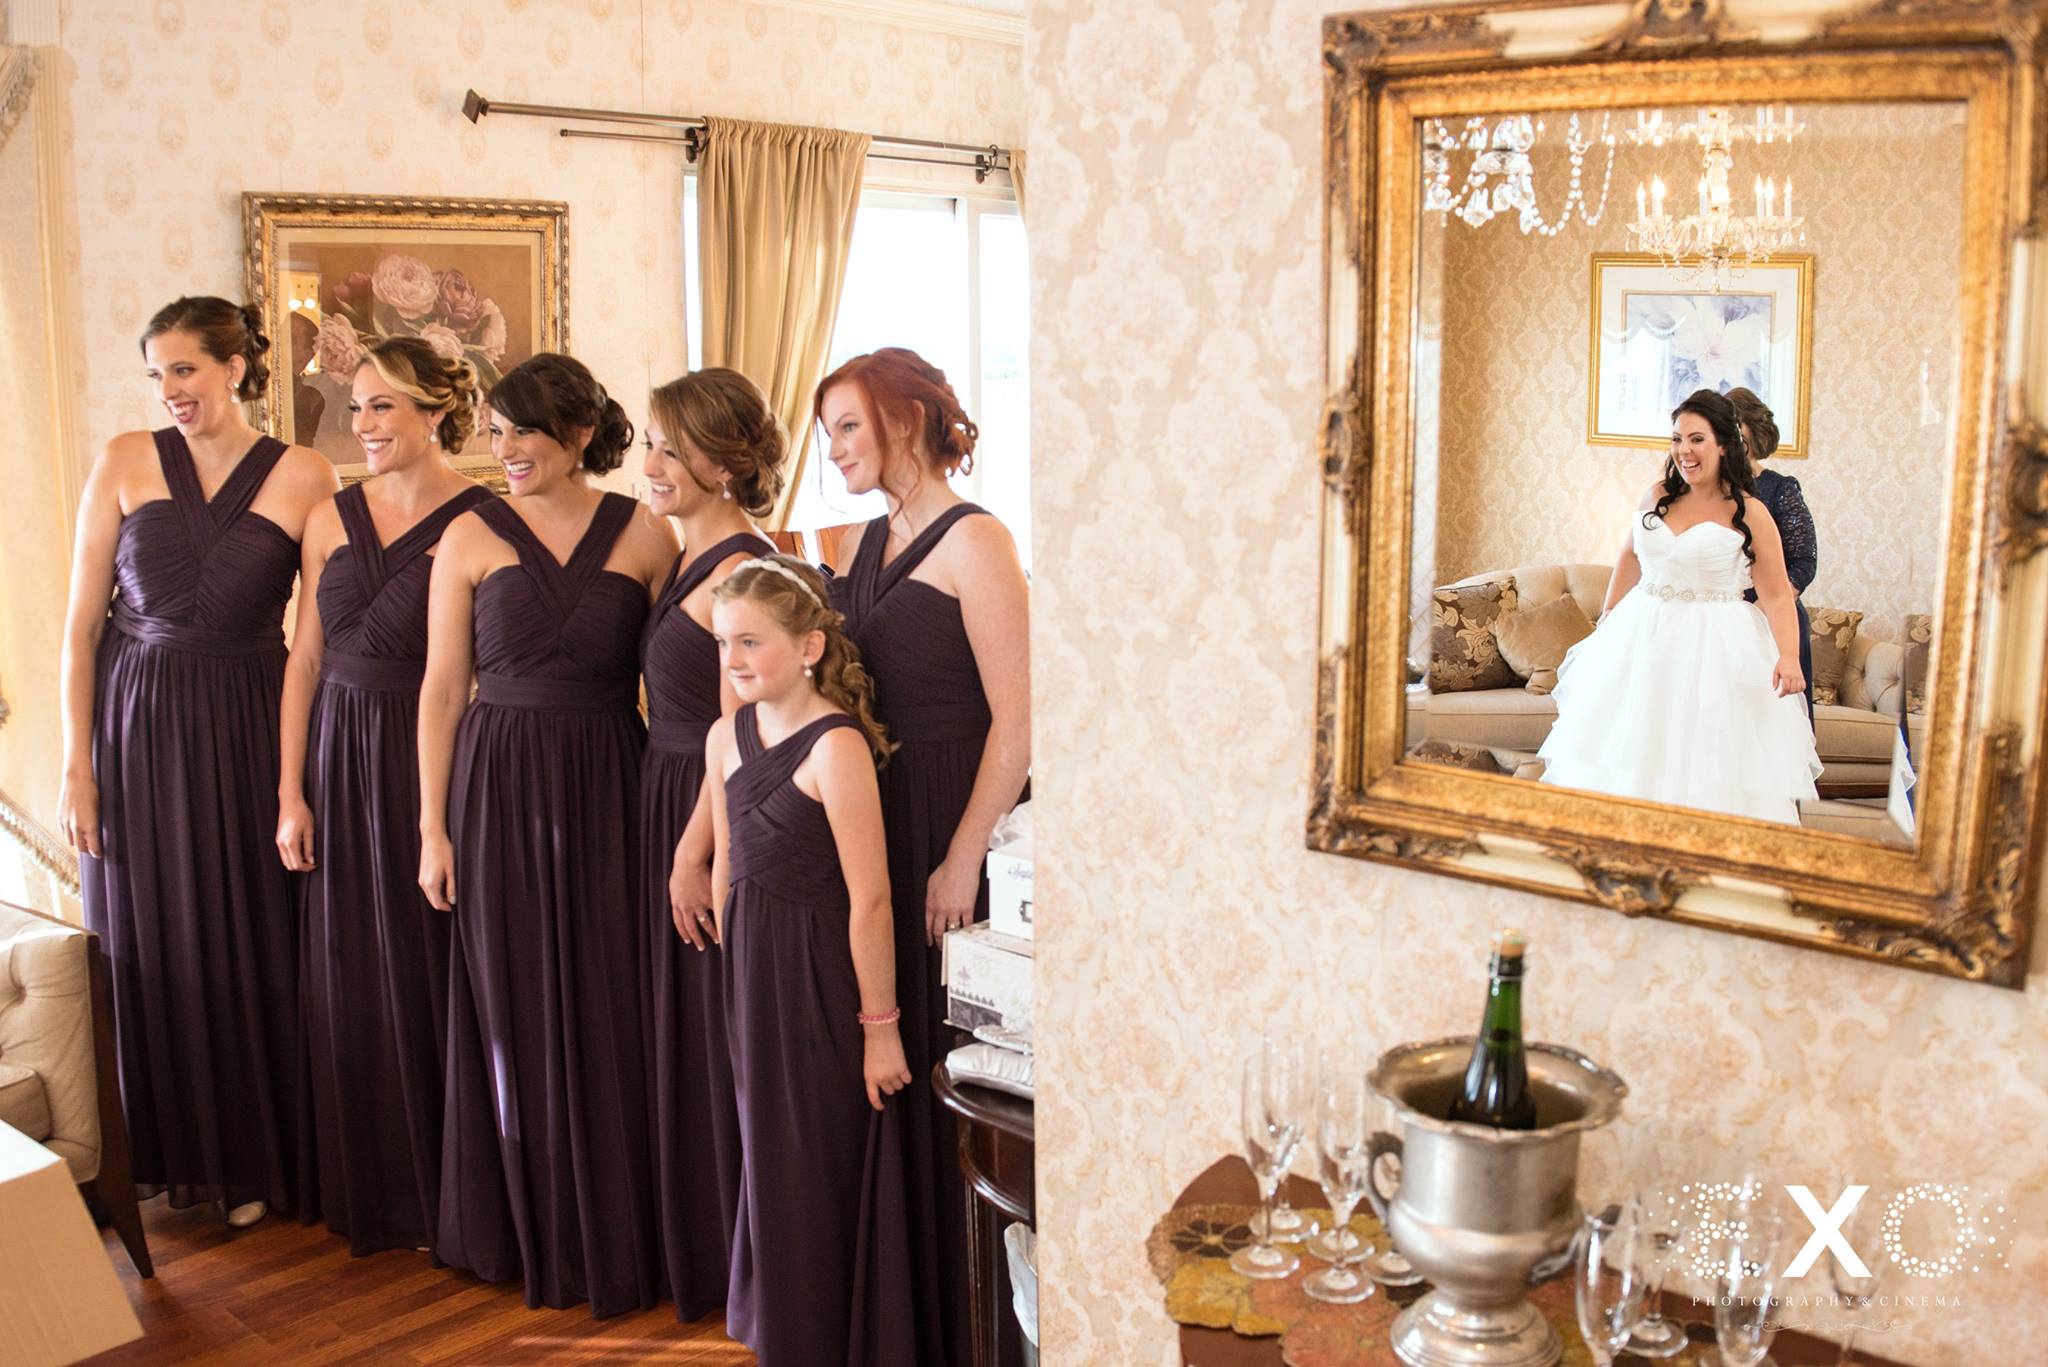 Mirror image of bride wearing burton bridals gown designed by stella york with bridesmaids